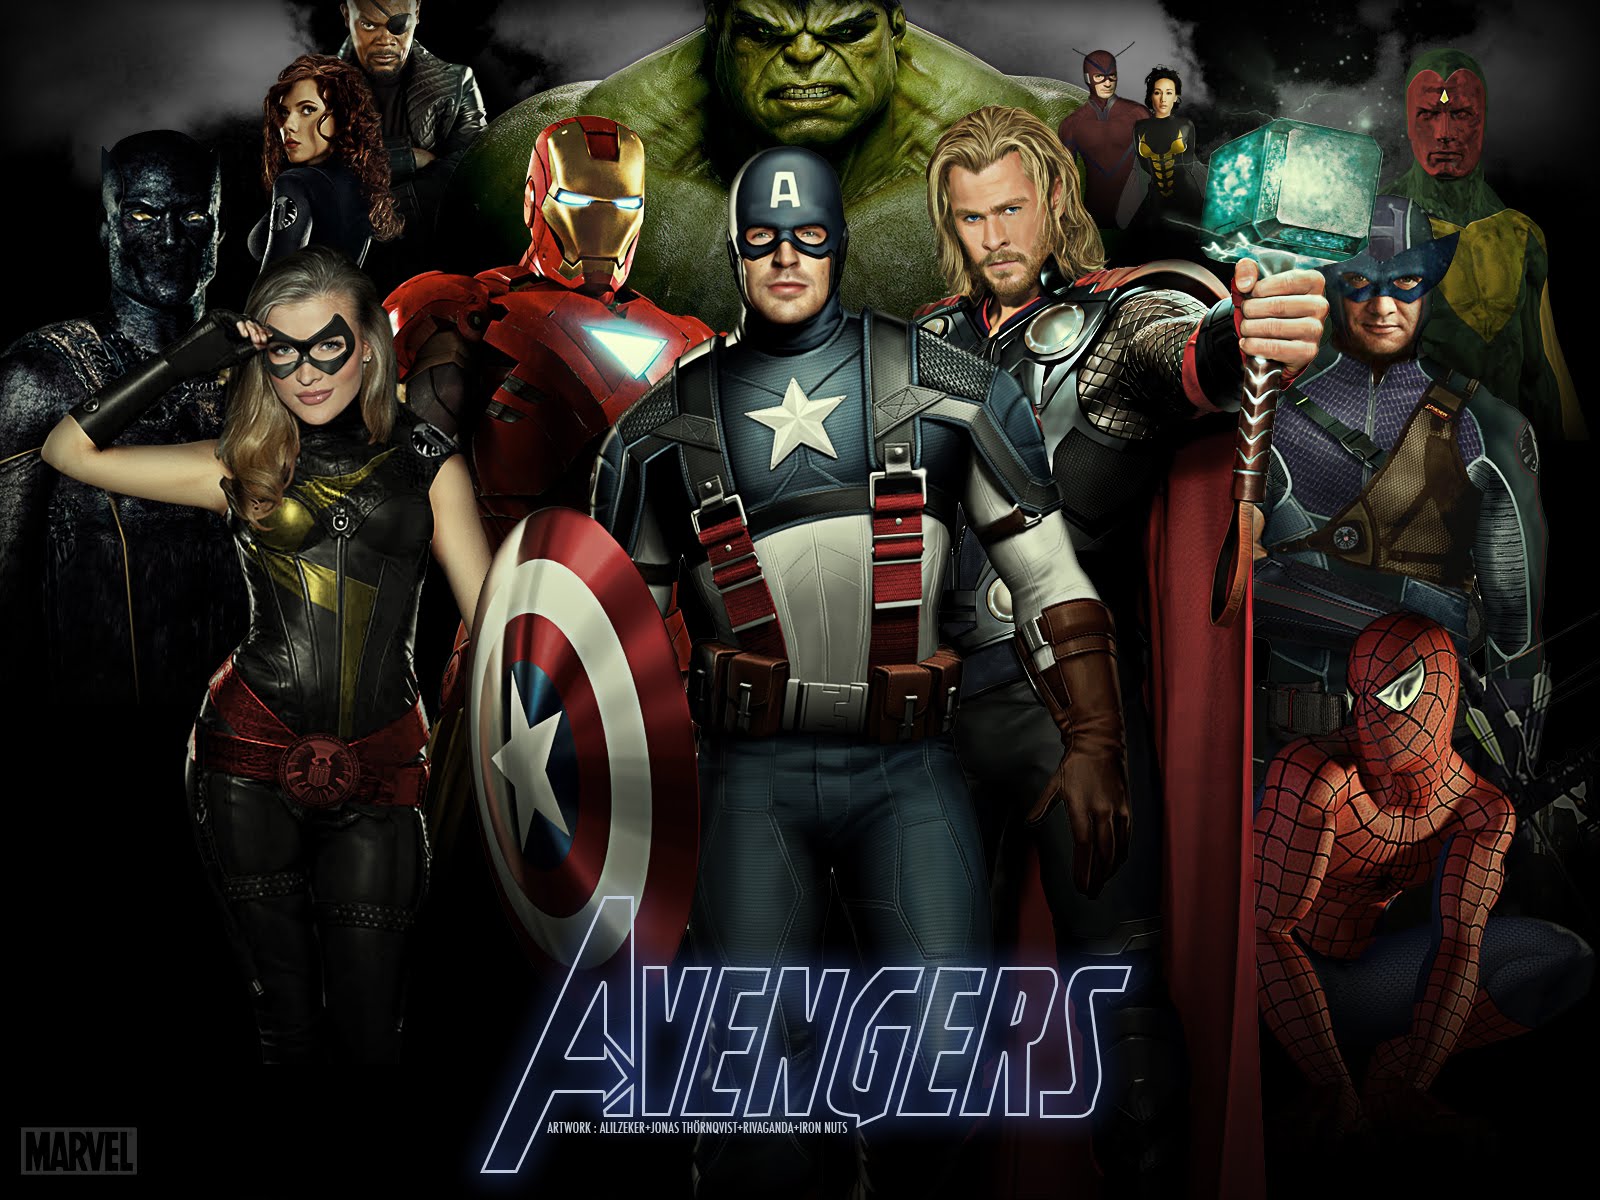 https://blogger.googleusercontent.com/img/b/R29vZ2xl/AVvXsEig5vJLlbFPJ0qZK89uAbBkWrUKbB6uyGSIQACjNbHauL3crtW0UnAhxMbCySJZwtYqEGTXZjy3QqvjGPjLjqlmL1n1Sr6GBMvCDvRLyrVFikIK16fPJabn2uUZBws-MvDJ6O2tZG3n59E/s1600/1301228683-Avengers-Wallpaper-v2-by-ALilZeker-Featuring-Marvels-Captain-America-Thor-Iron-Man-Spider-Man-Black-Widow-Nick-Fury-More.jpg